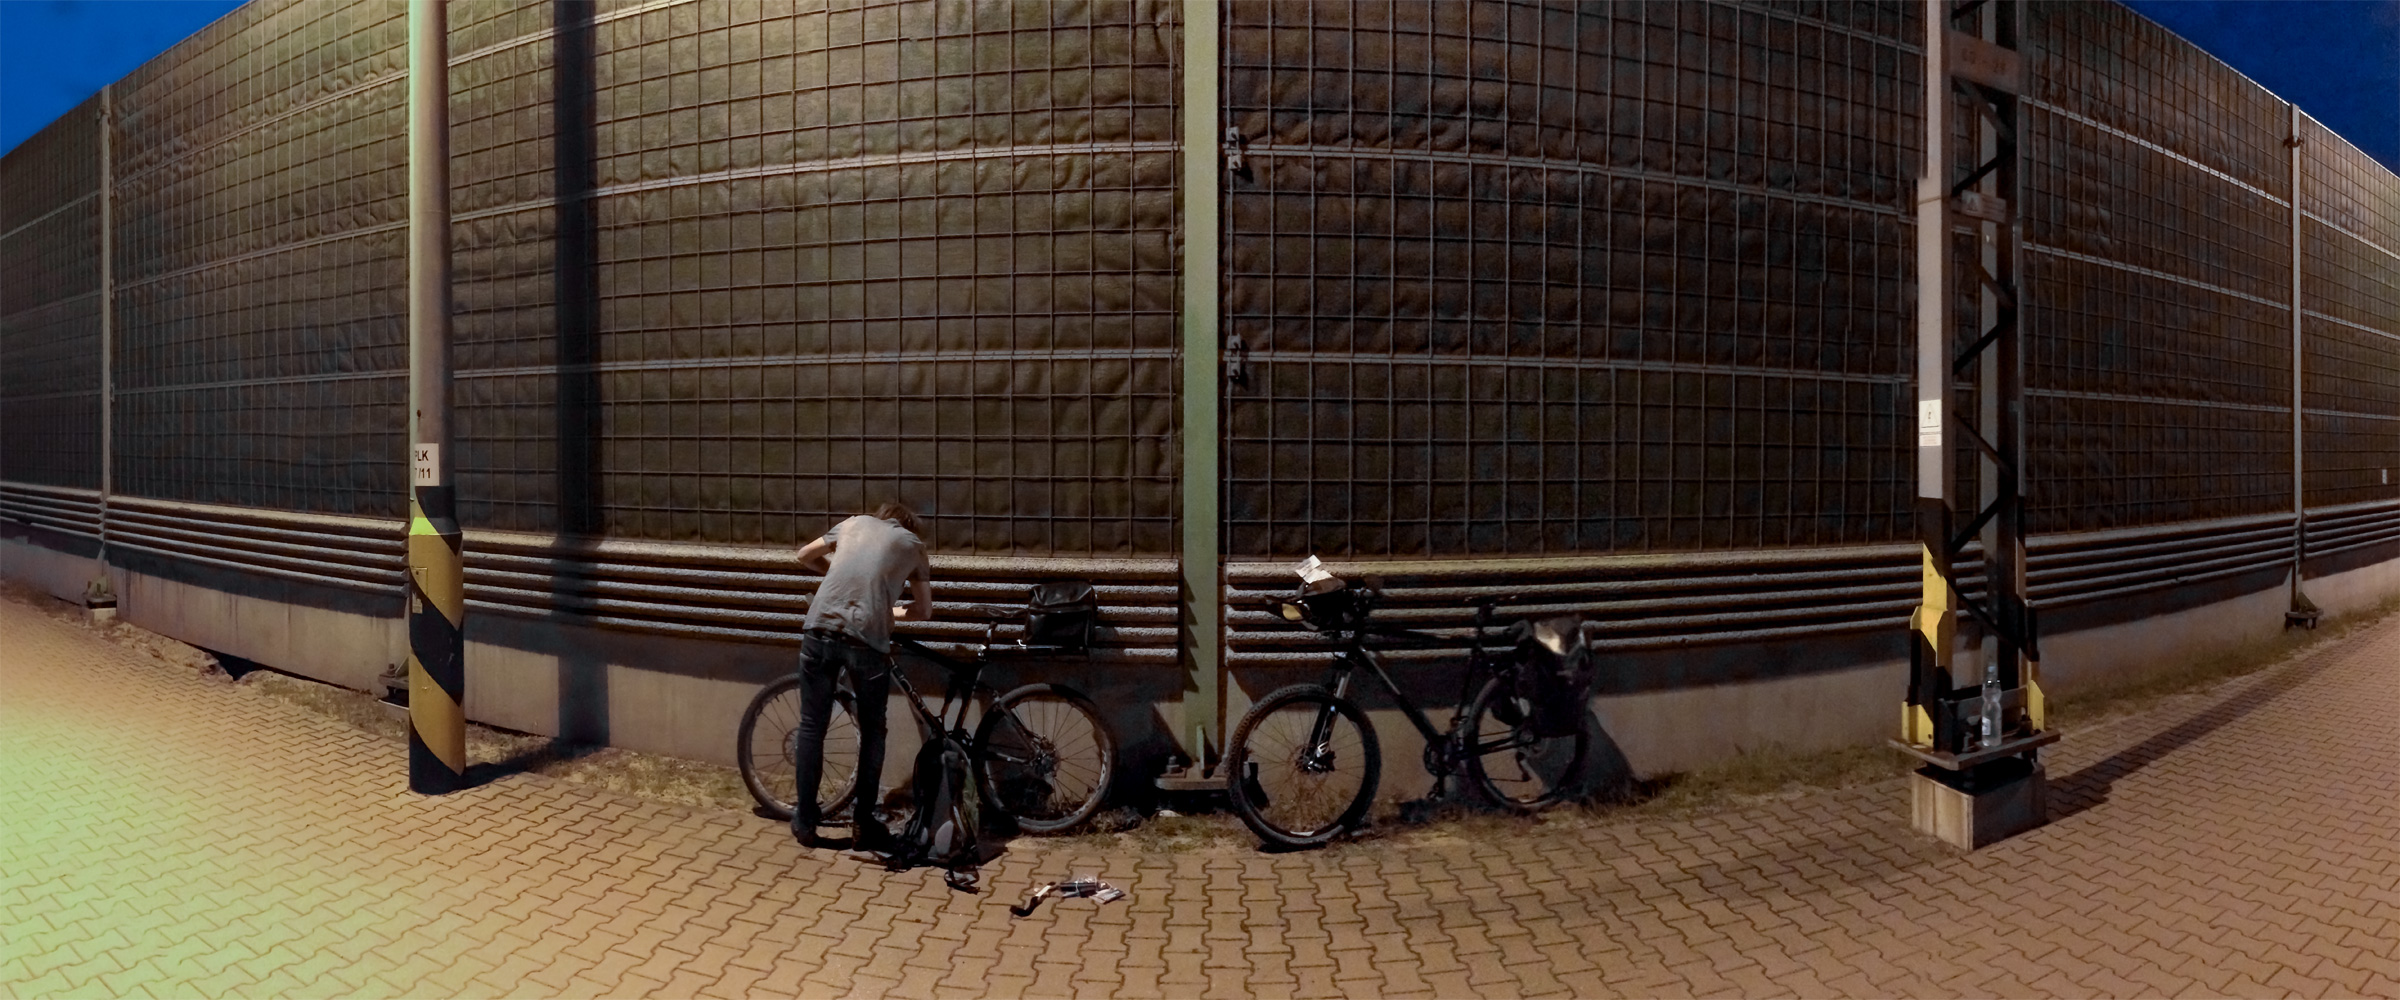 Bikes at the train station | PANORAMA DIARY